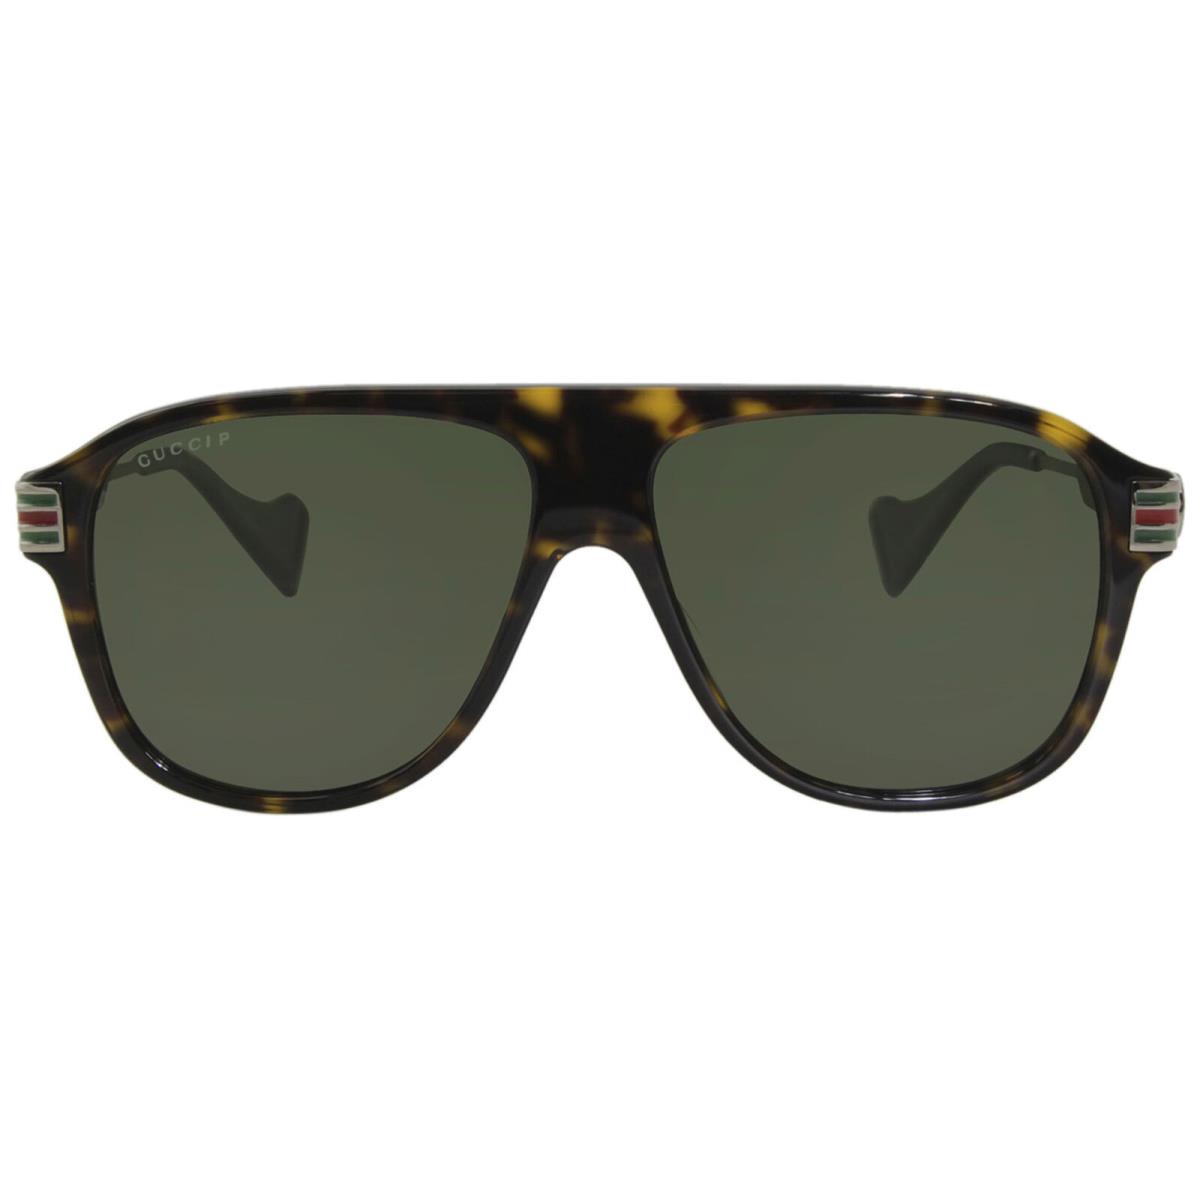 Gucci GG0587S 002 Sunglasses Men`s Havana-silver/green Lenses Polarized Pilot